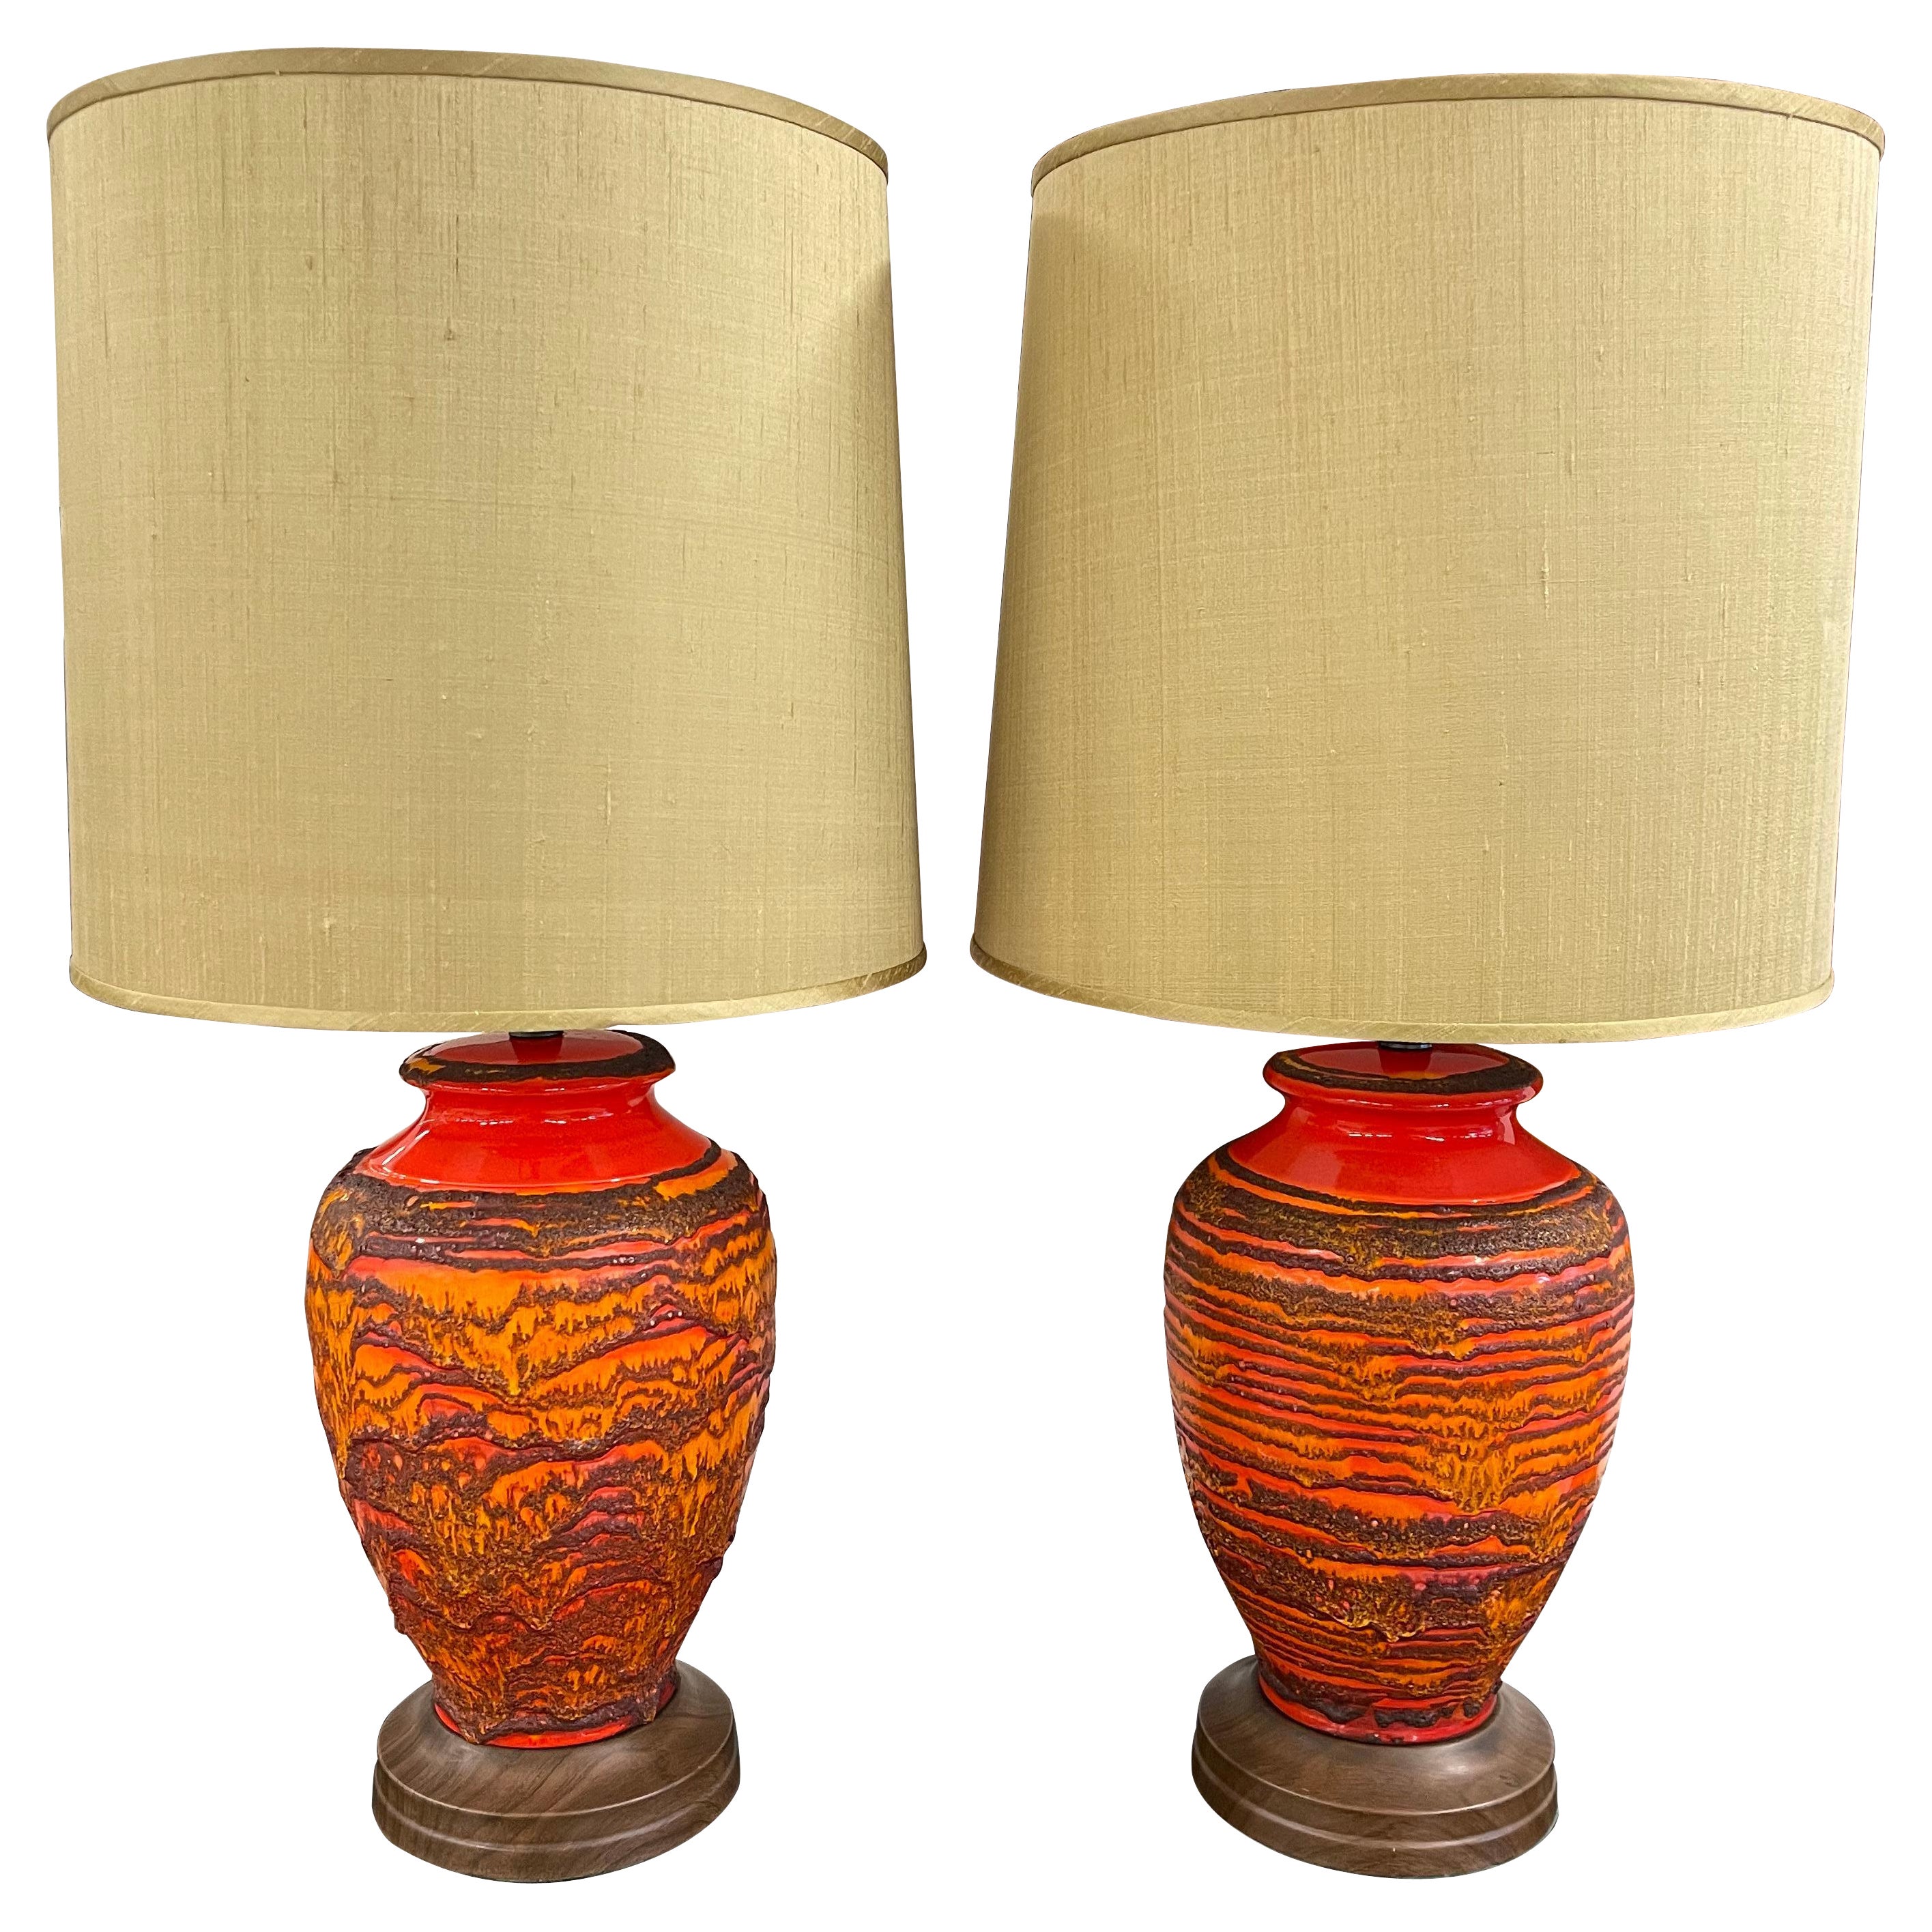 Lava Glaze Ceramic Lamps For Sale